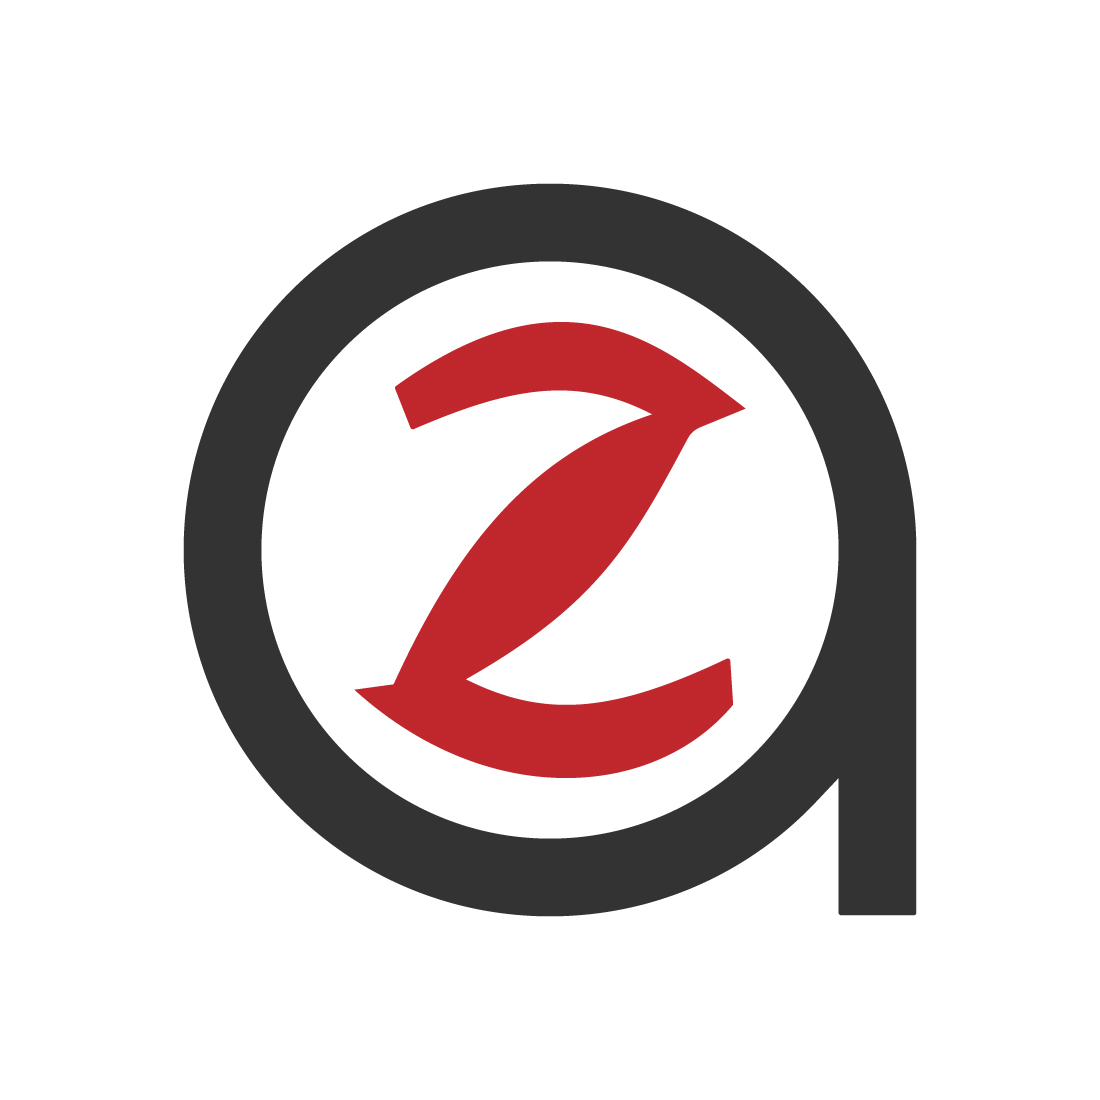 Initials QZ letters logo design vector icon ZQ logo design red and black color images QZ logo template icon Premium vector illustration preview image.